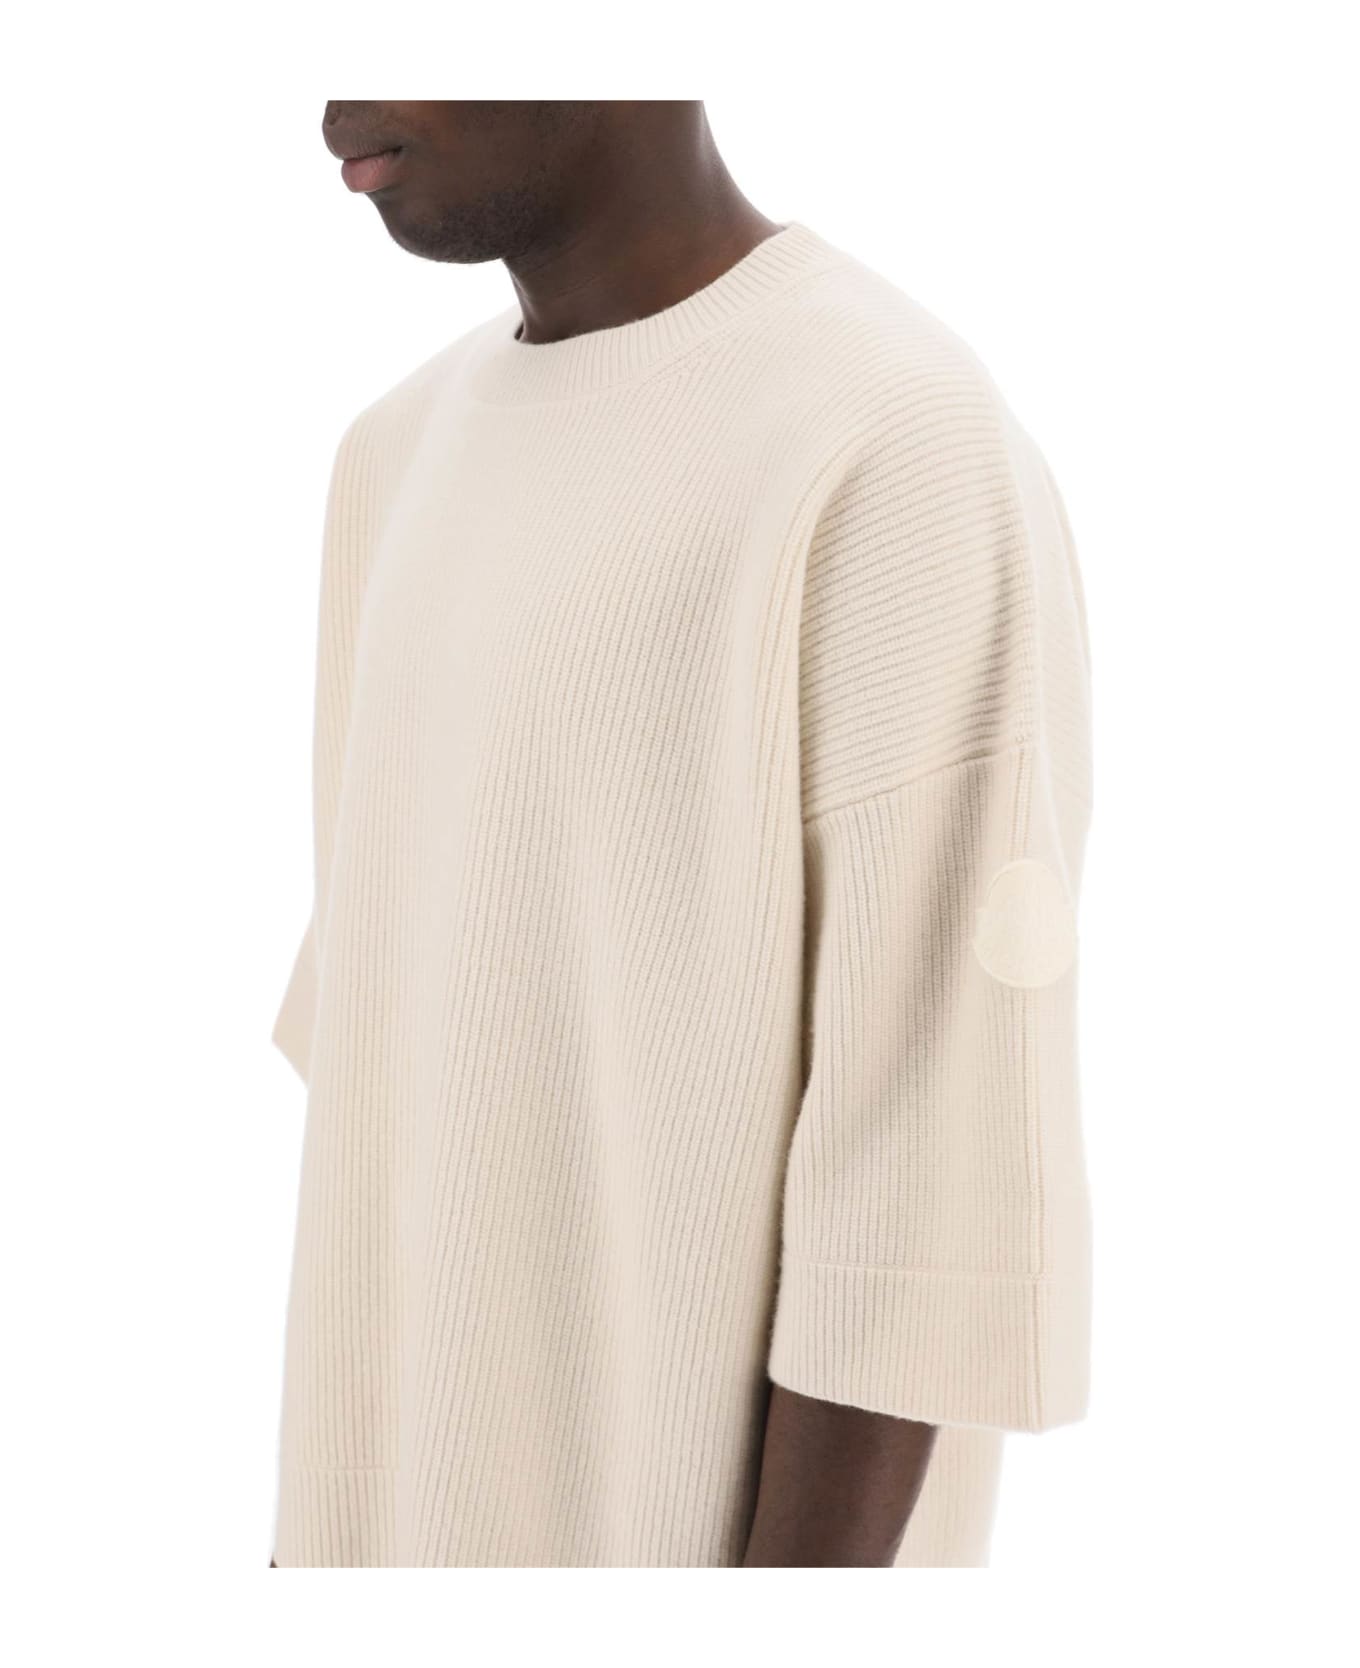 Moncler Genius Short-sleeved Wool Sweater - White